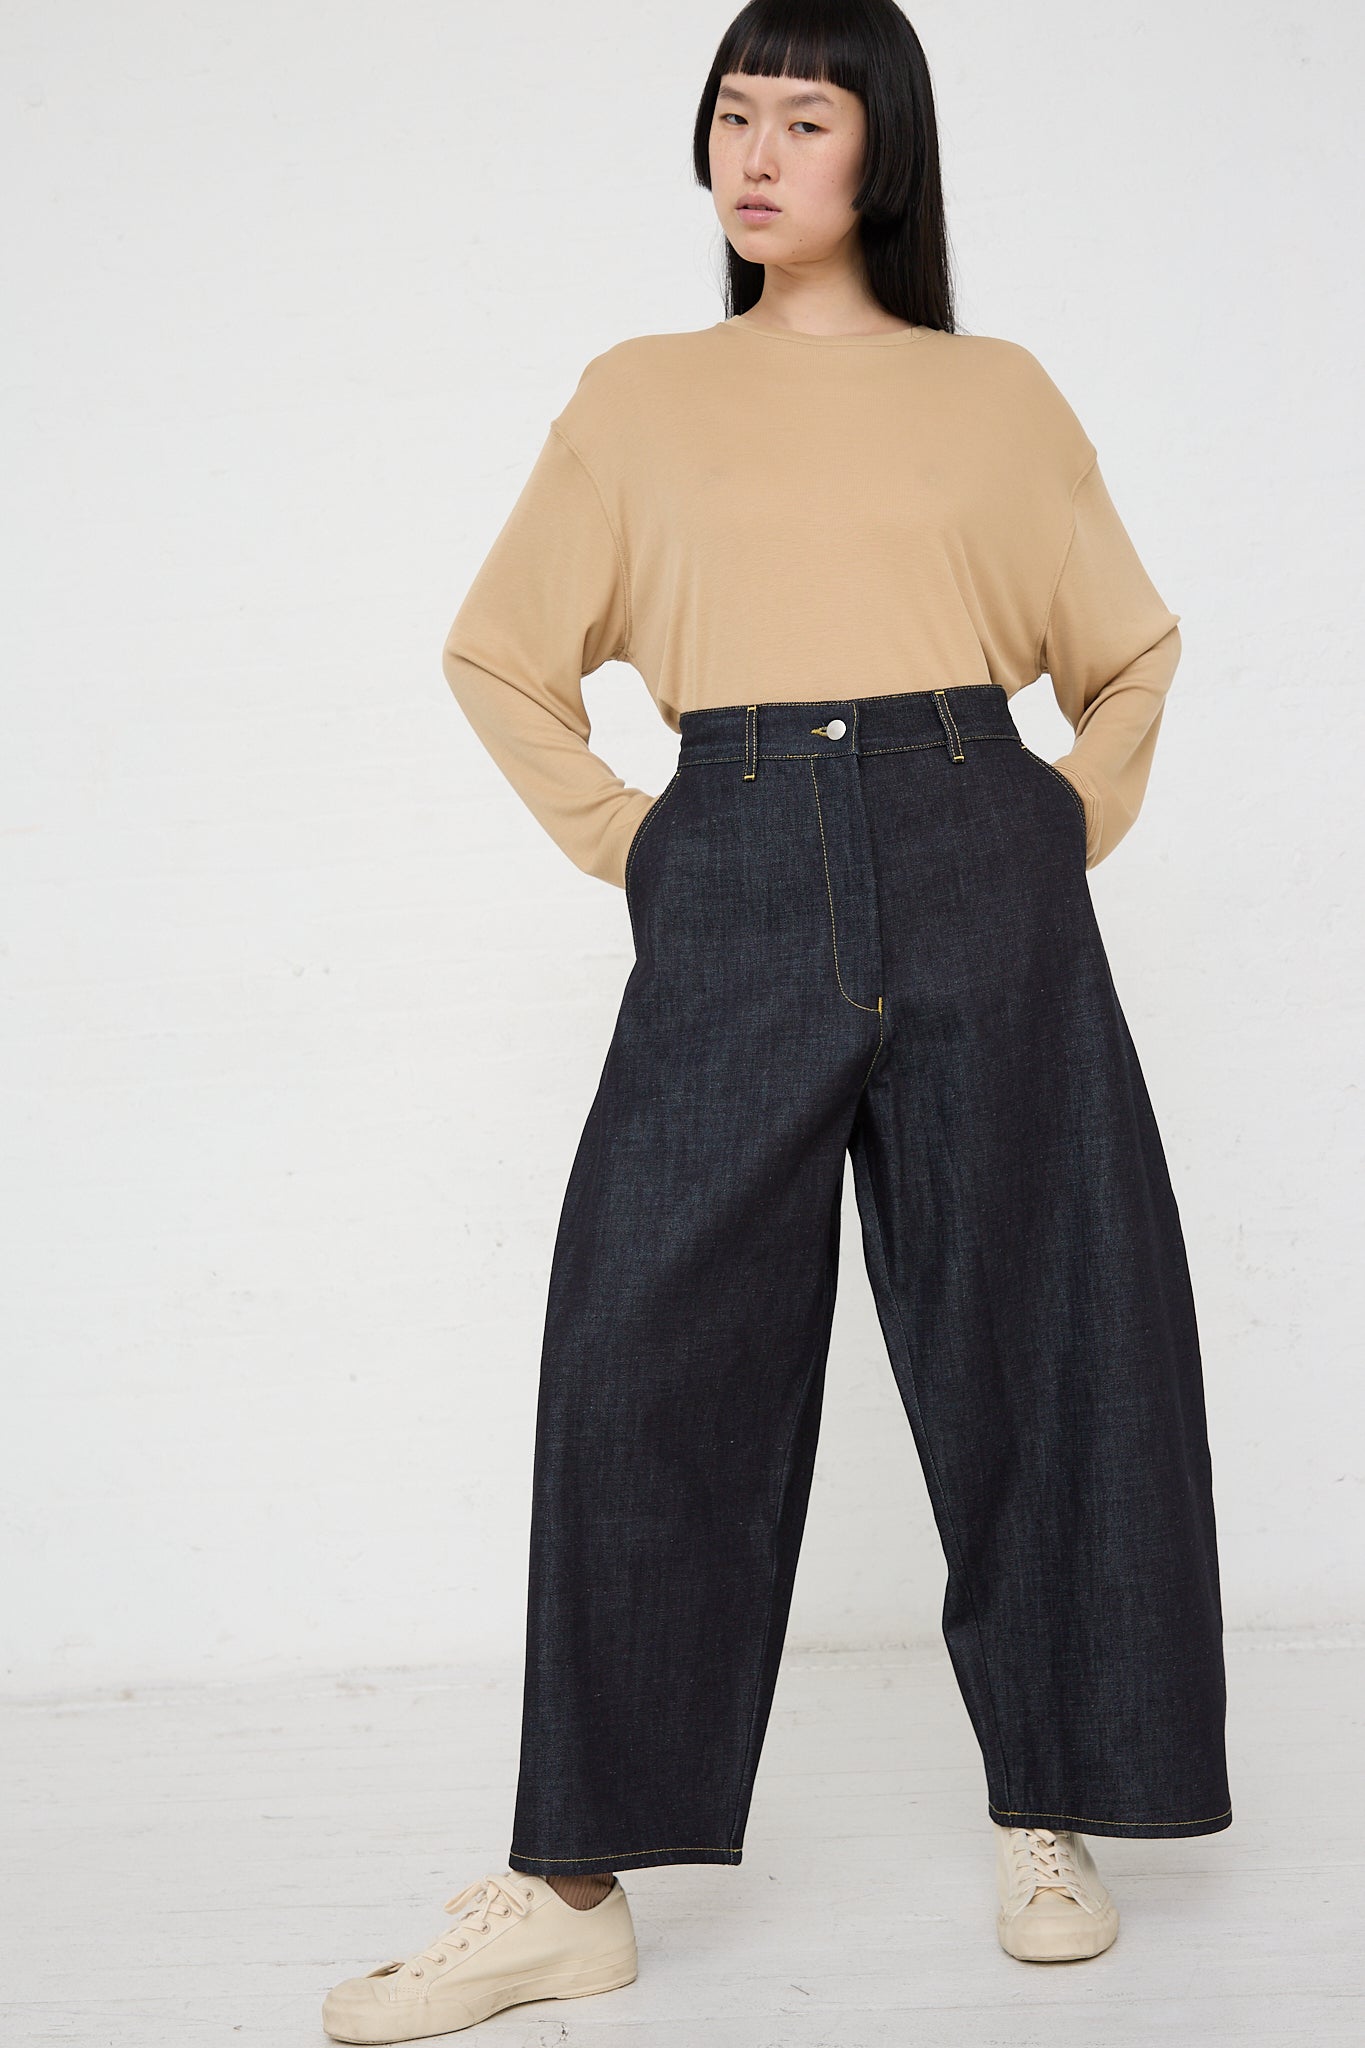 A woman wearing a beige tee and Studio Nicholson's Chalco Wide Crop Jean in Raw Indigo wide leg pants in an oversized fit.